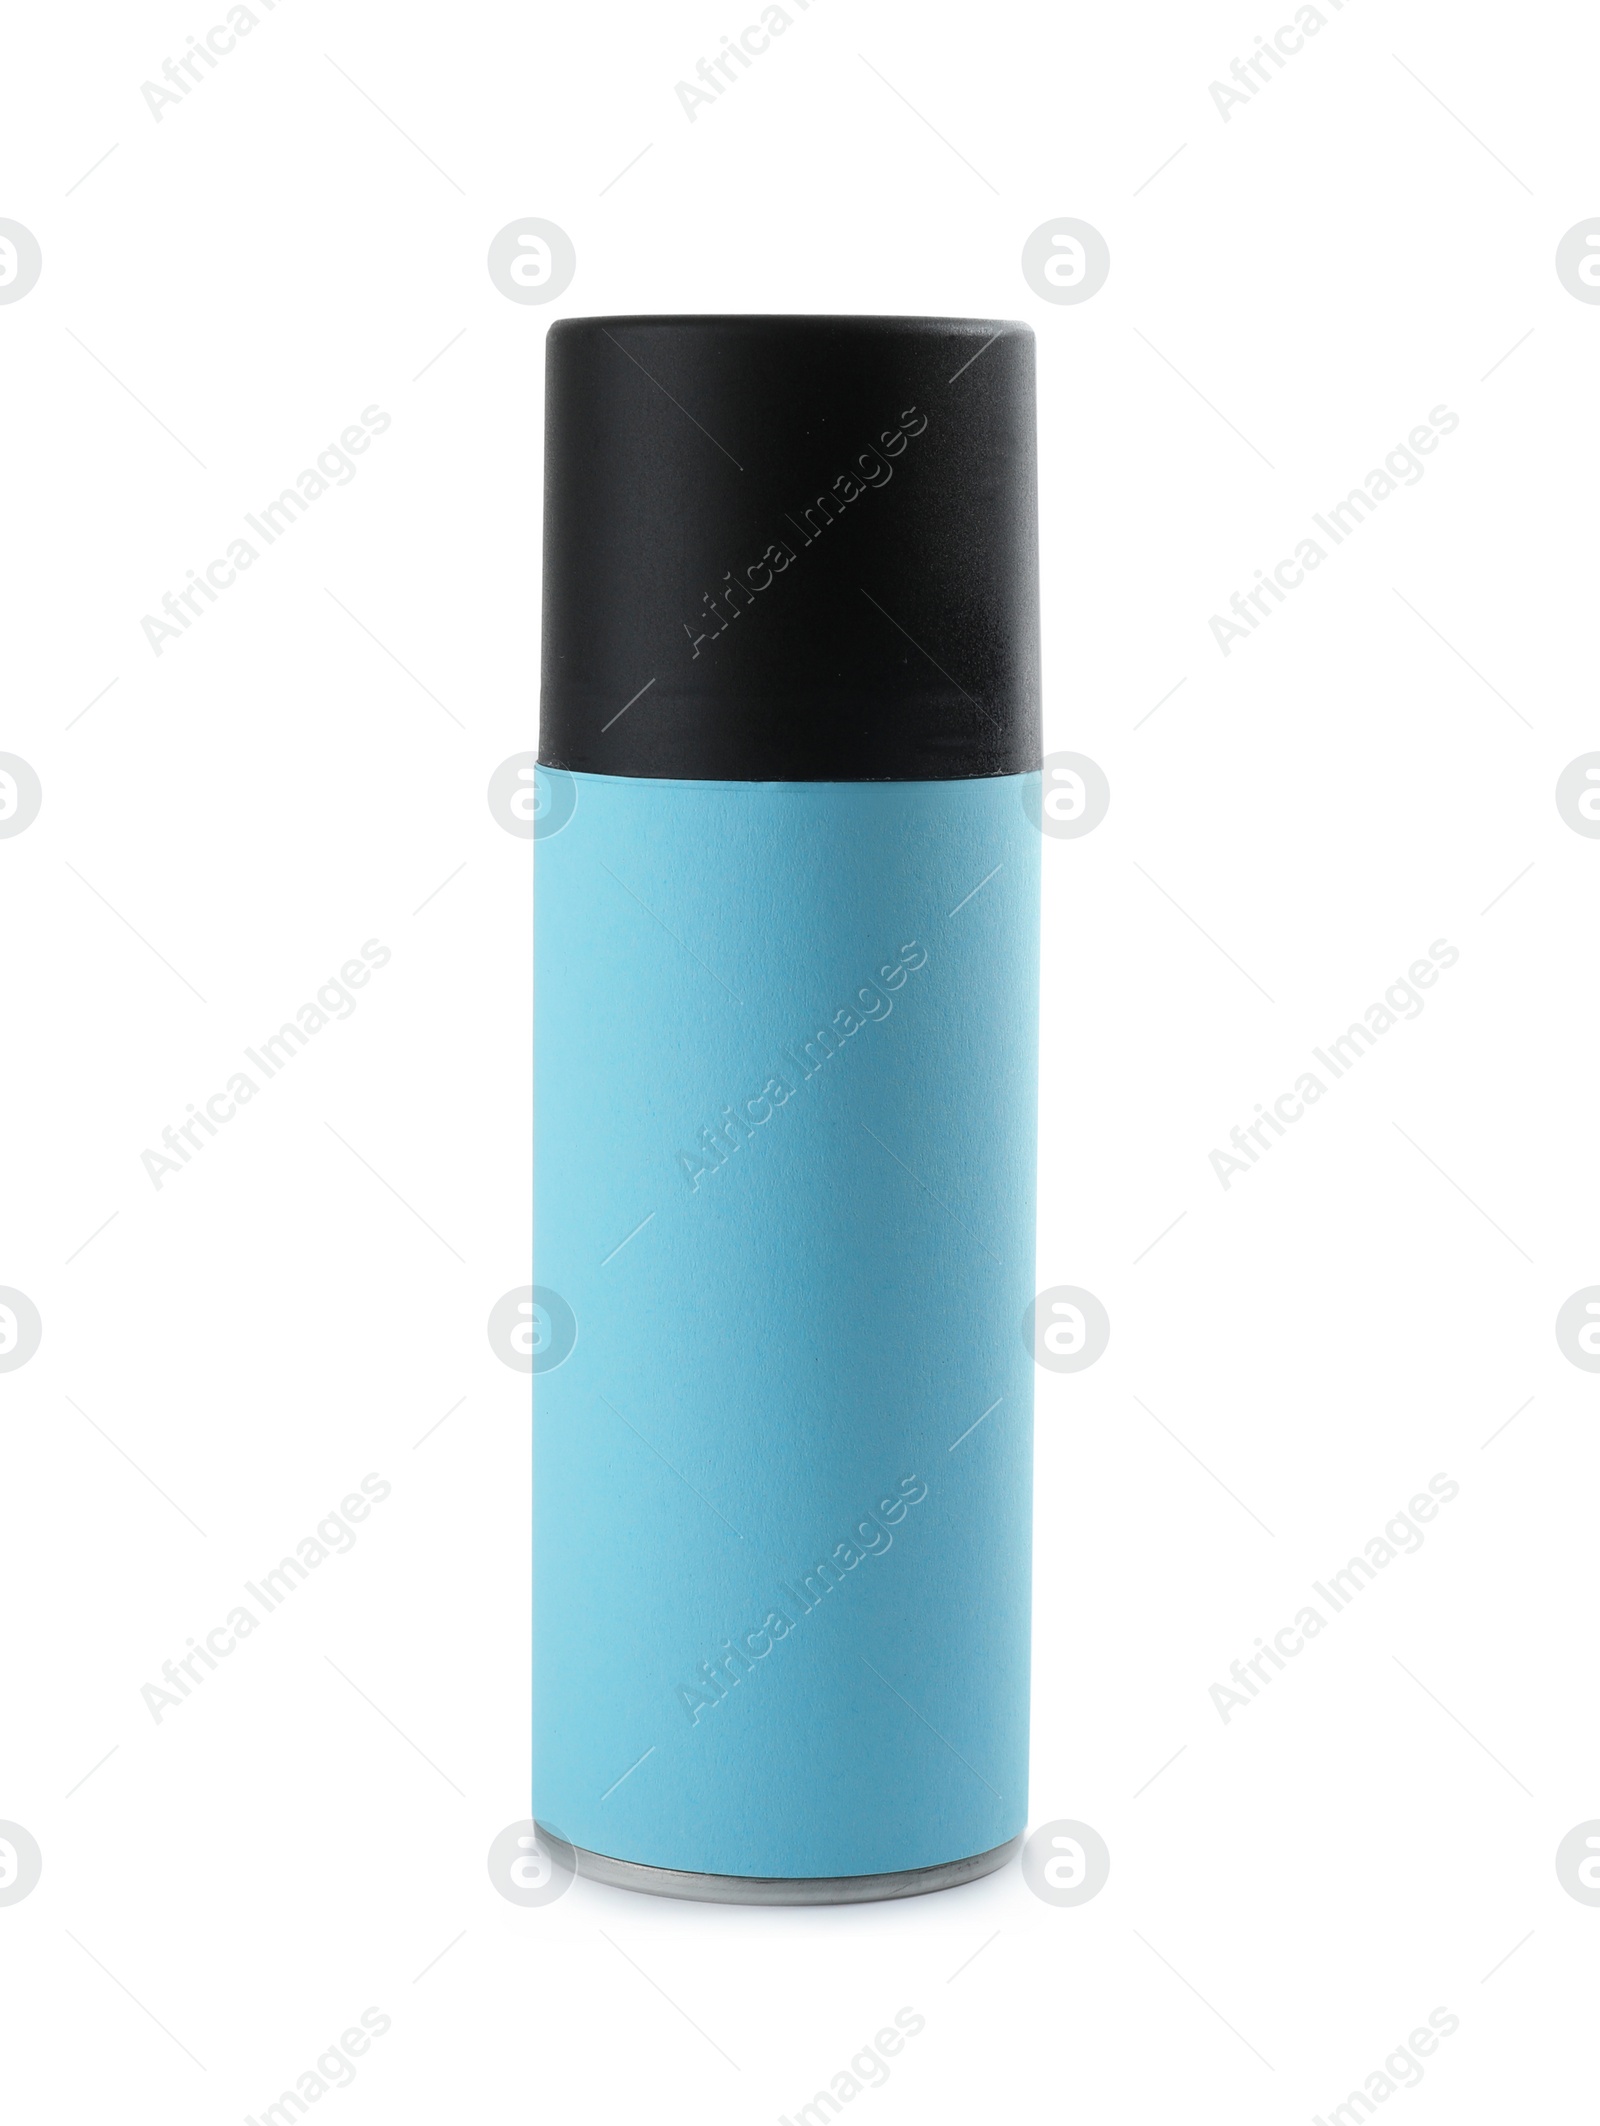 Photo of Closed bottle of spray deodorant on white background